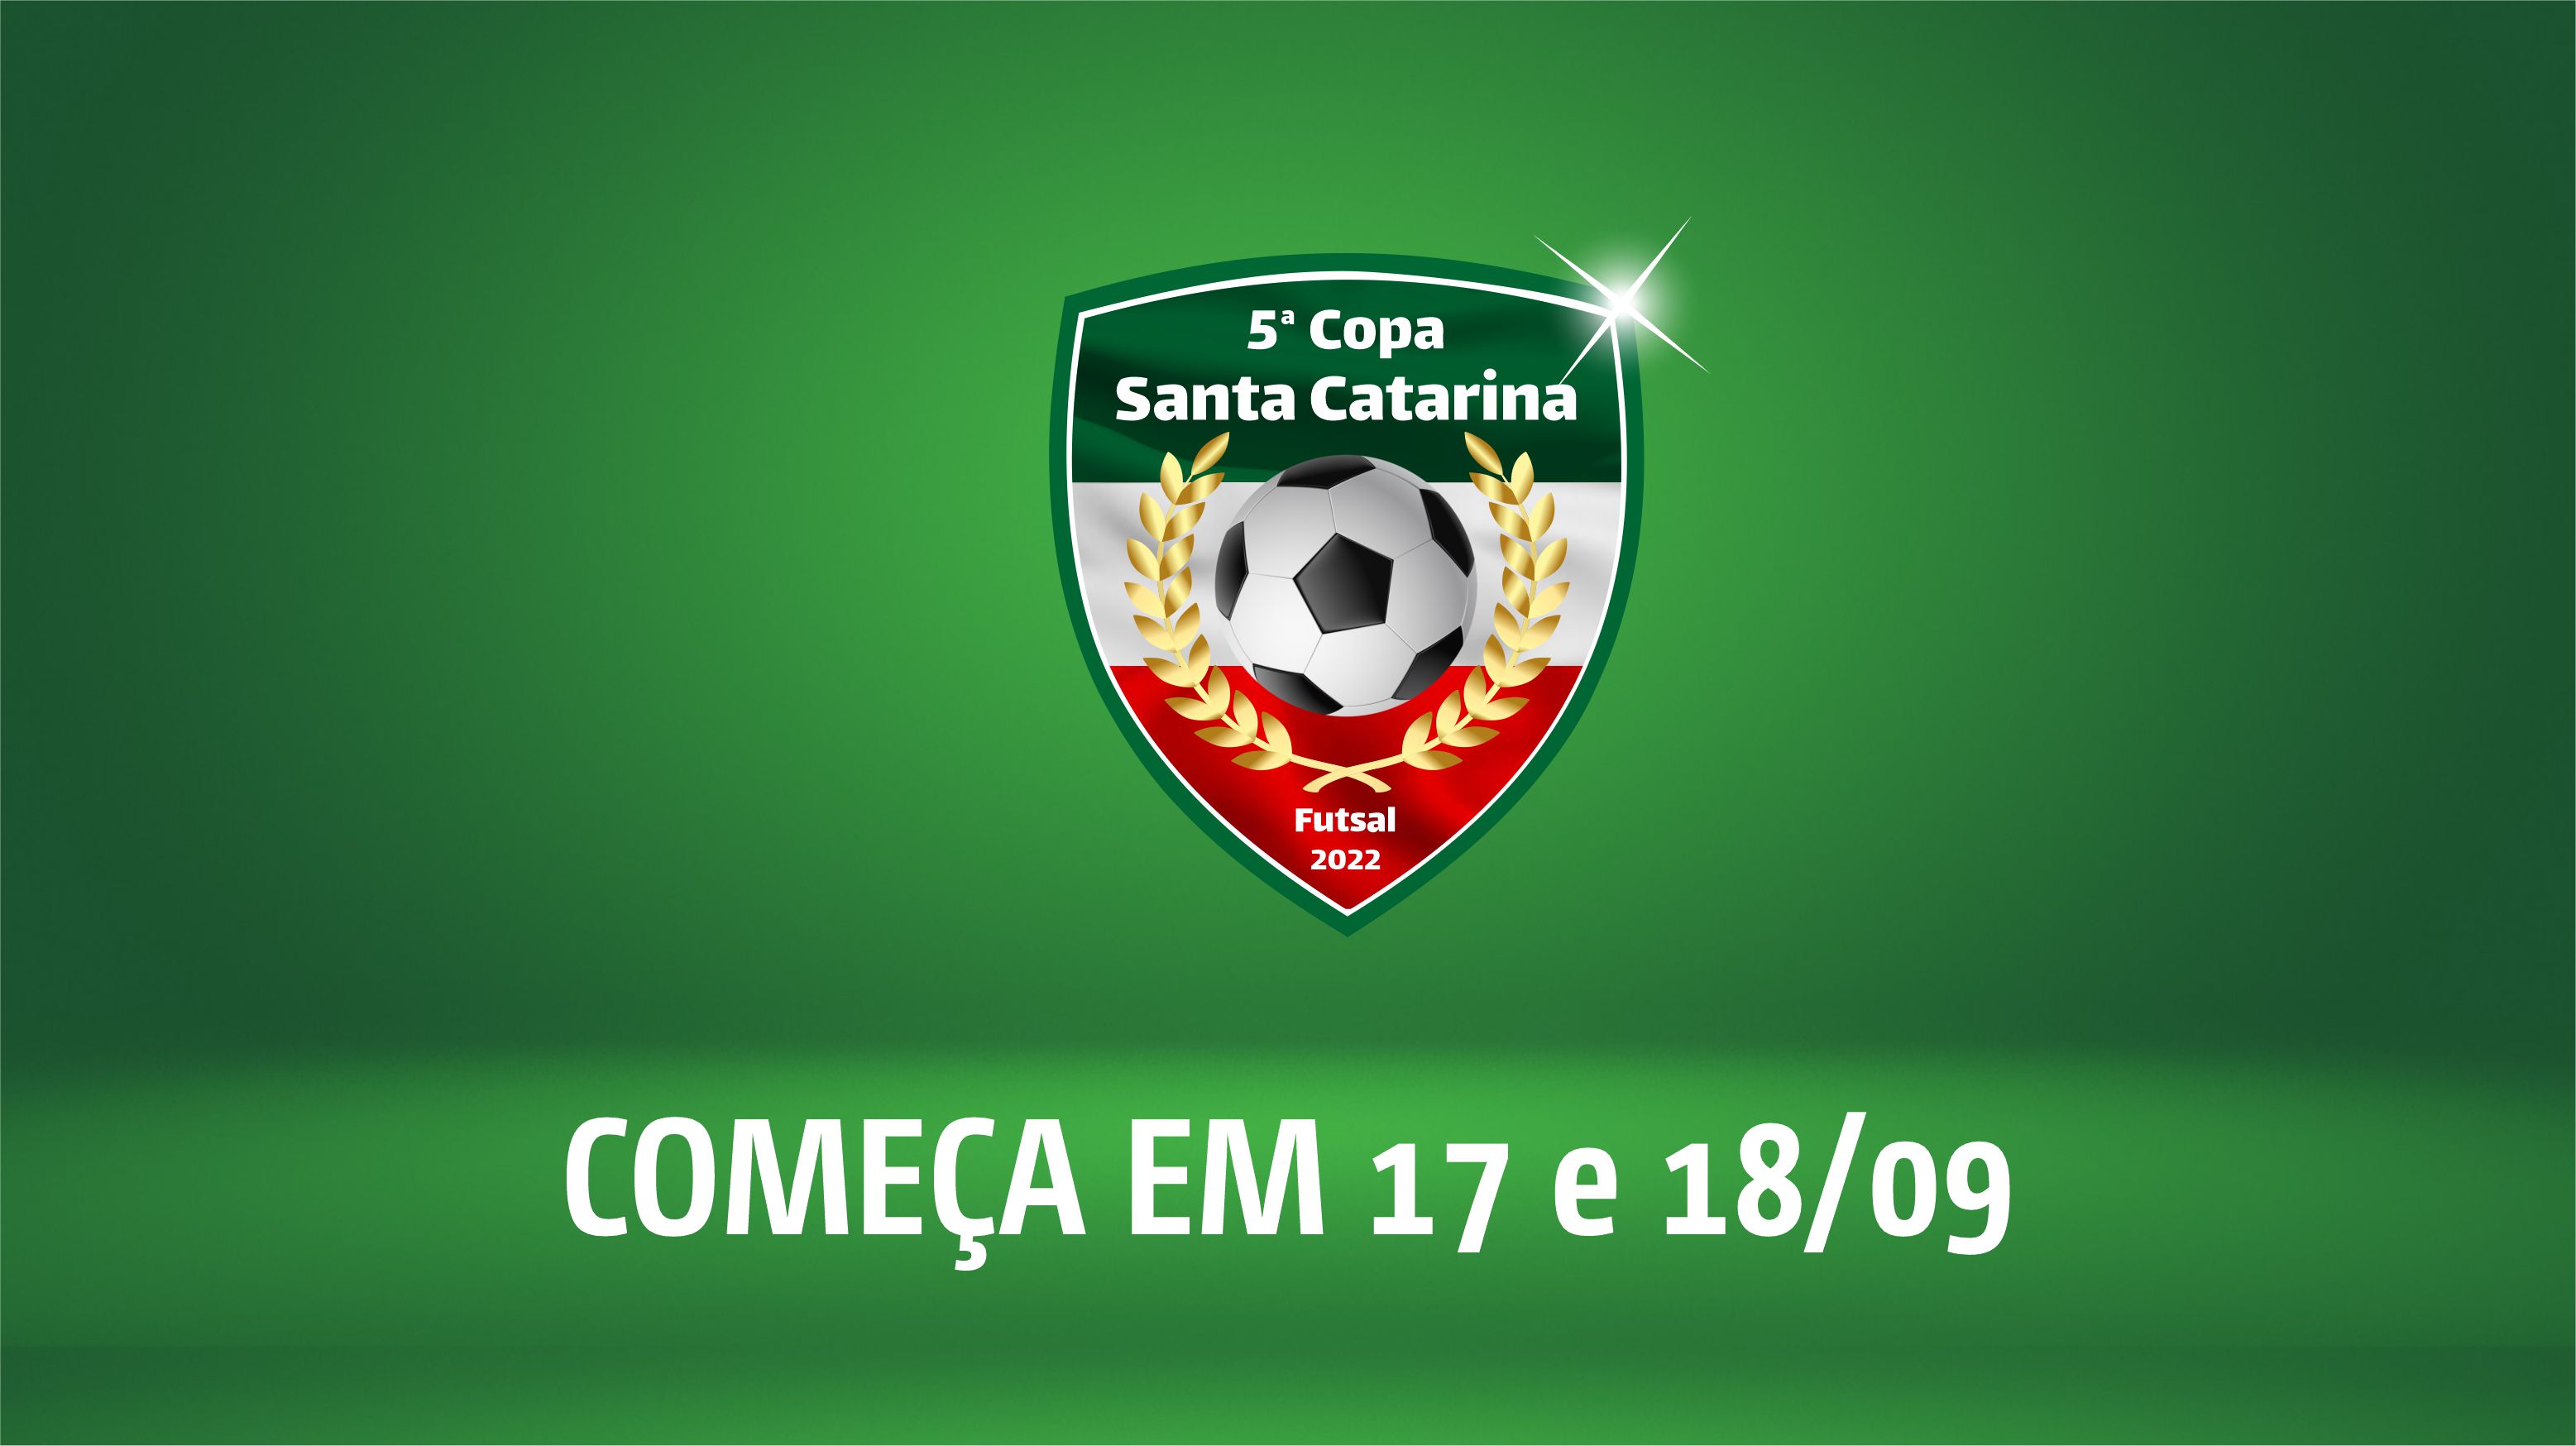 tabela Copa Santa Catarina